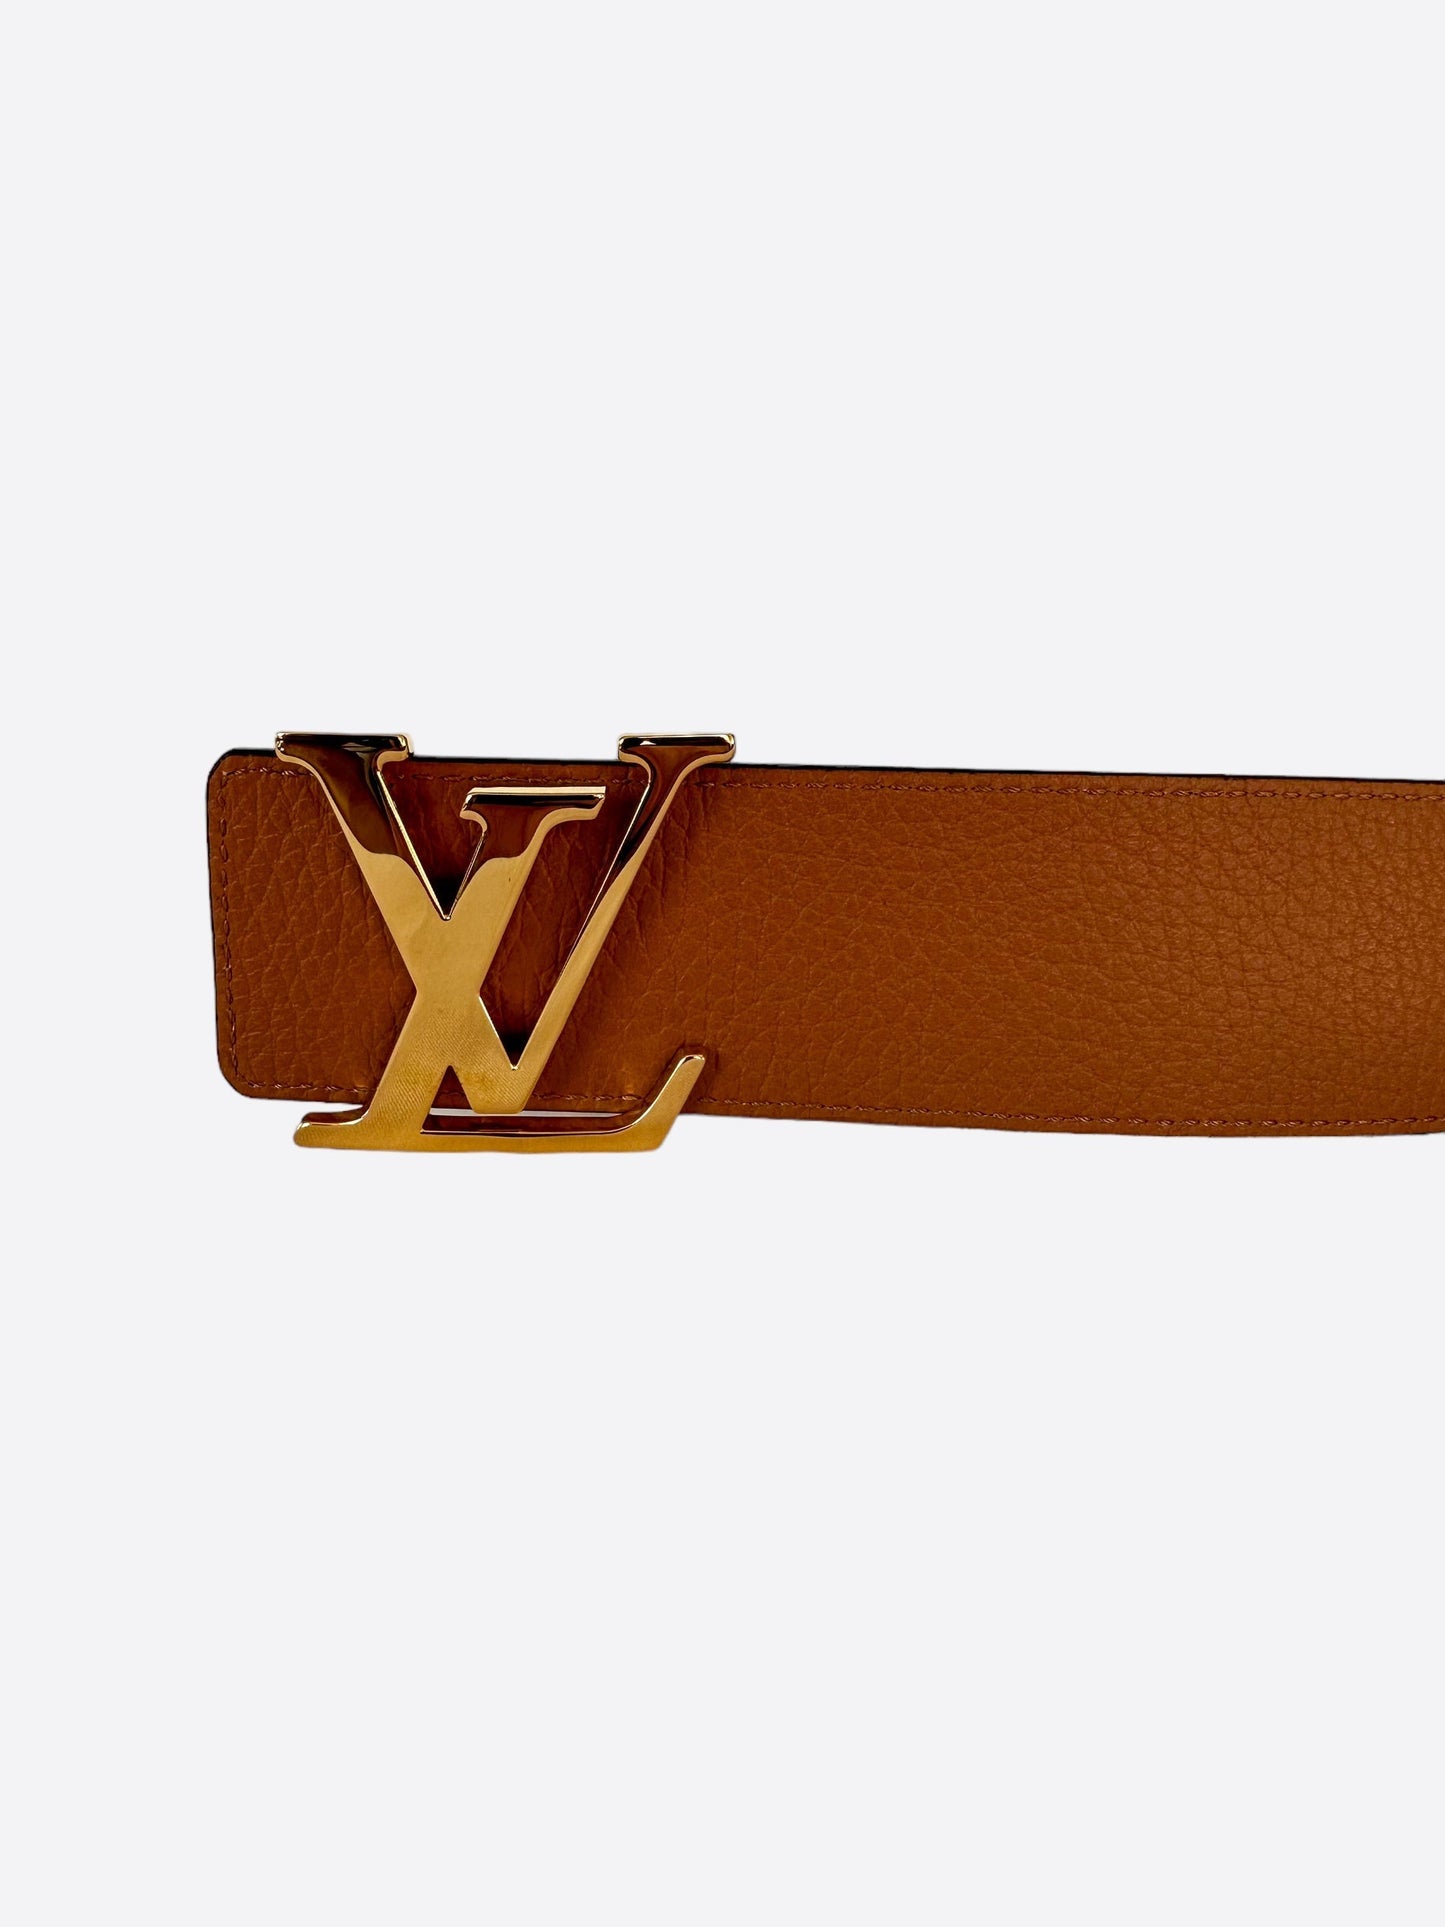 Louis Vuitton Monogram All You Need 30mm Belt, Black, 75